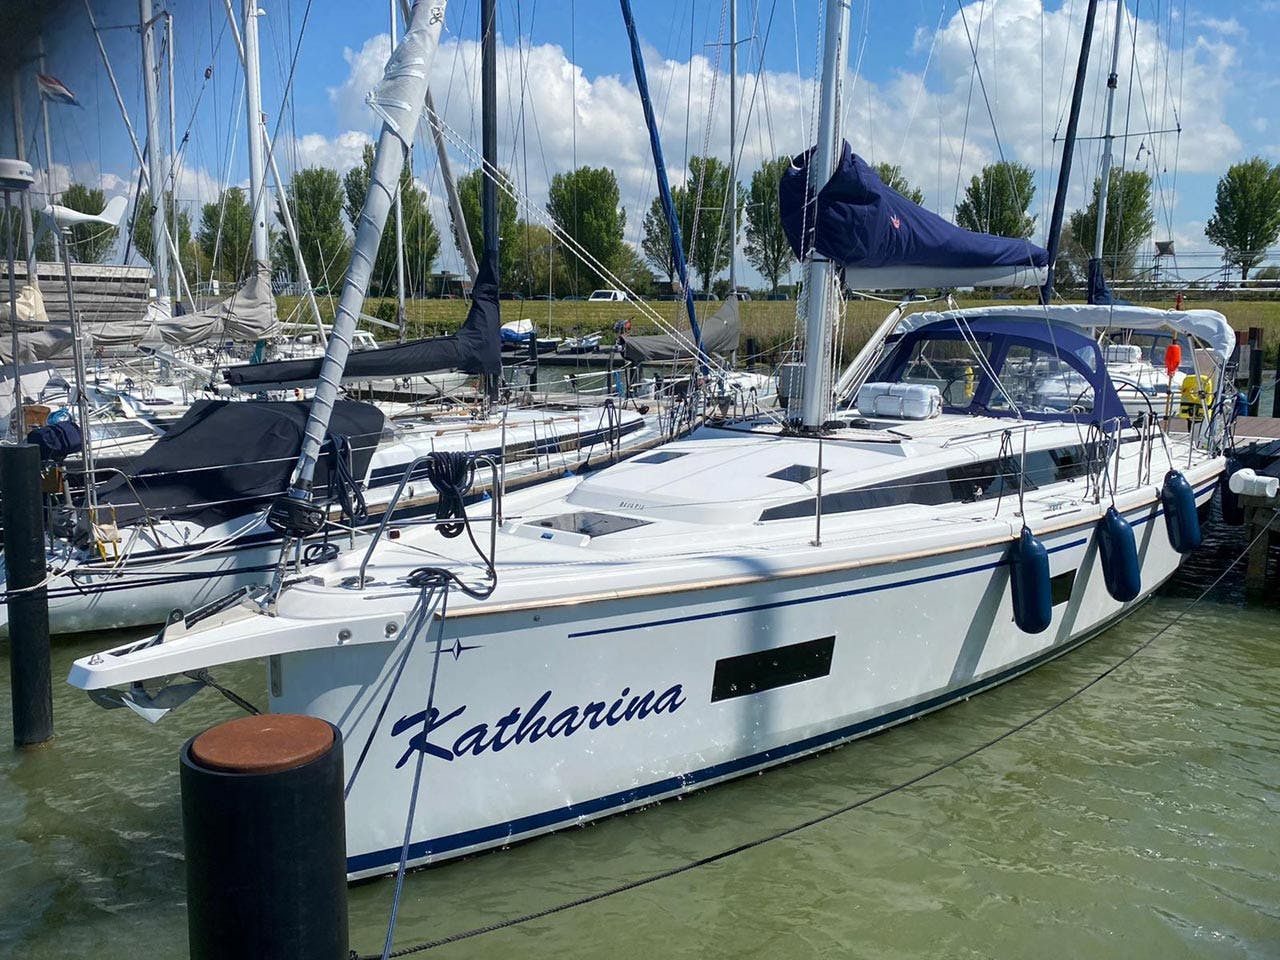 Book Bavaria C42 Sailing yacht for bareboat charter in Ijsselmeer/Lelystad Haven, Flevoland, Netherlands with TripYacht!, picture 1